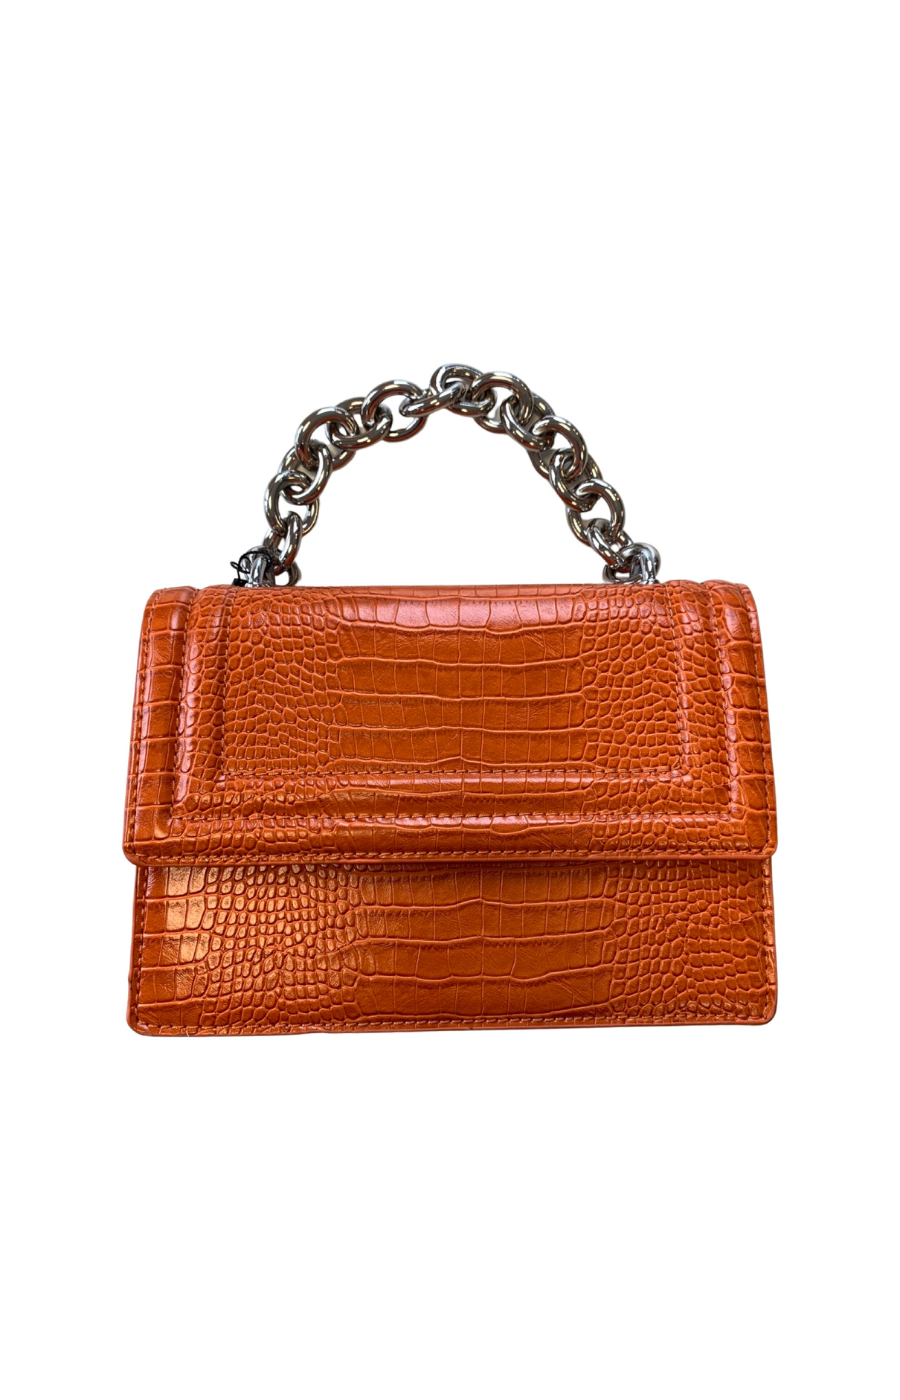 Crocodile Print Handbag in Orange - Wardrobe Plus